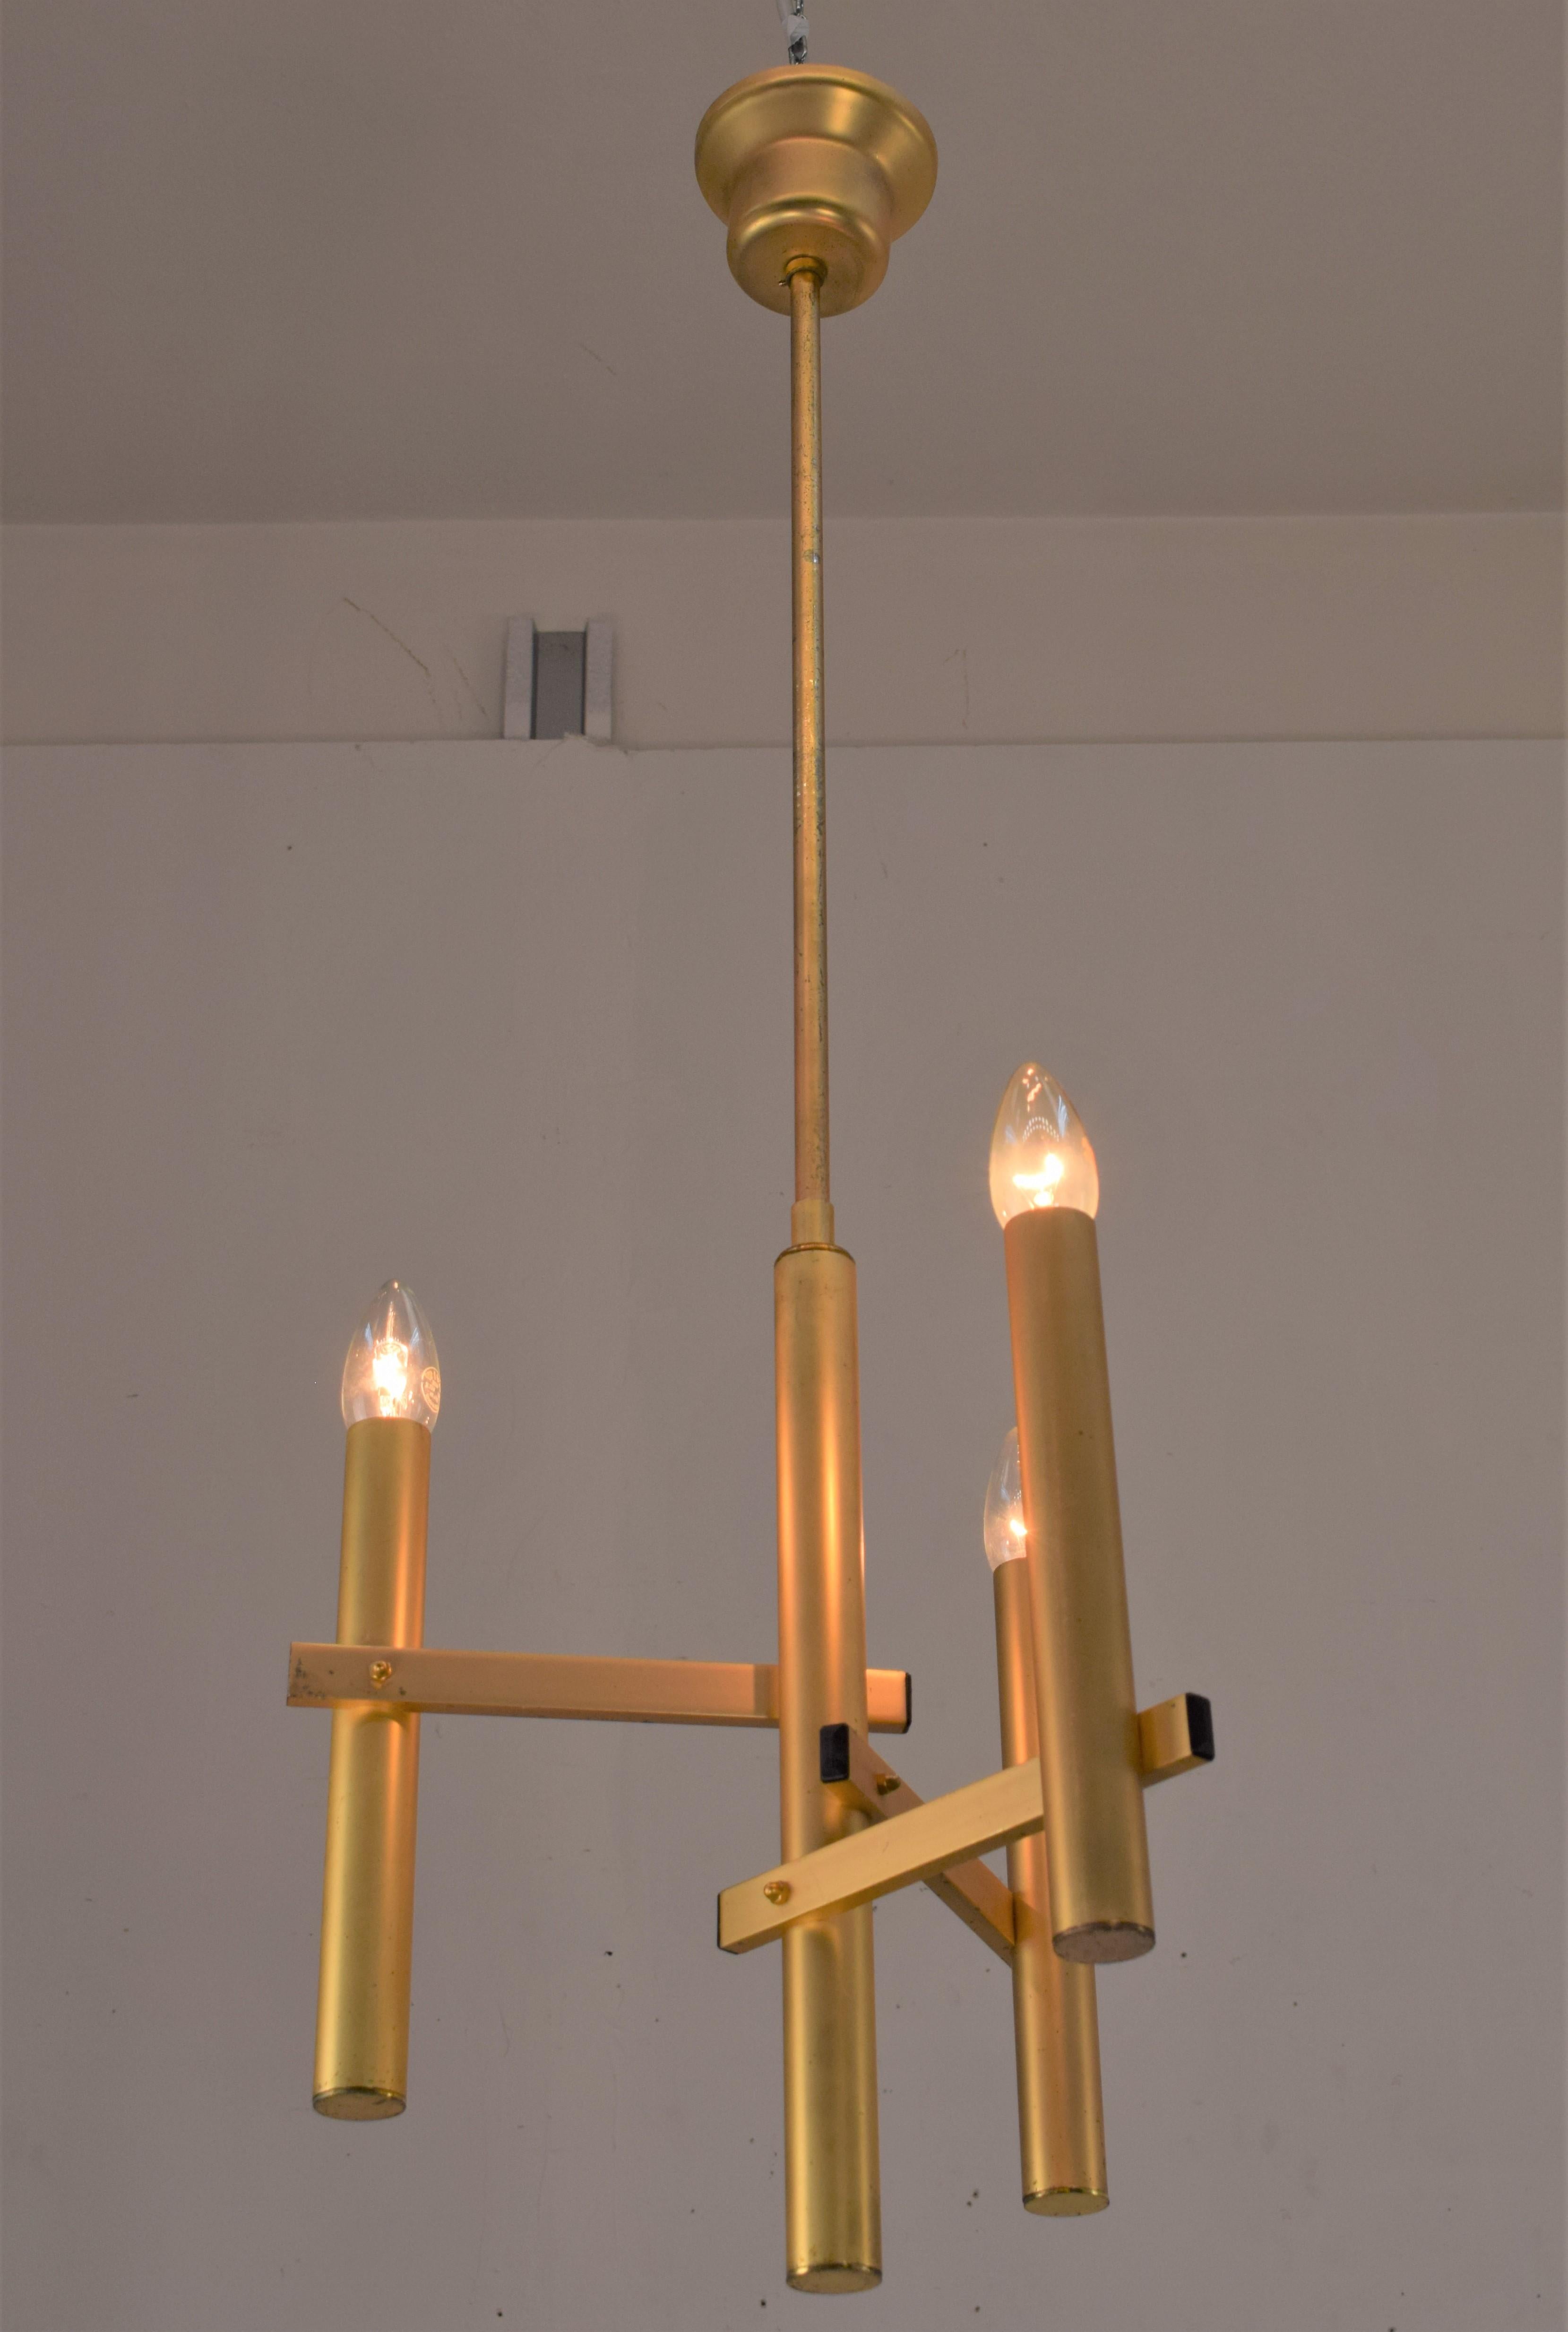 Set of three chandeliers, 1960s.
Dimensions: H=94 cm; D=30 cm.